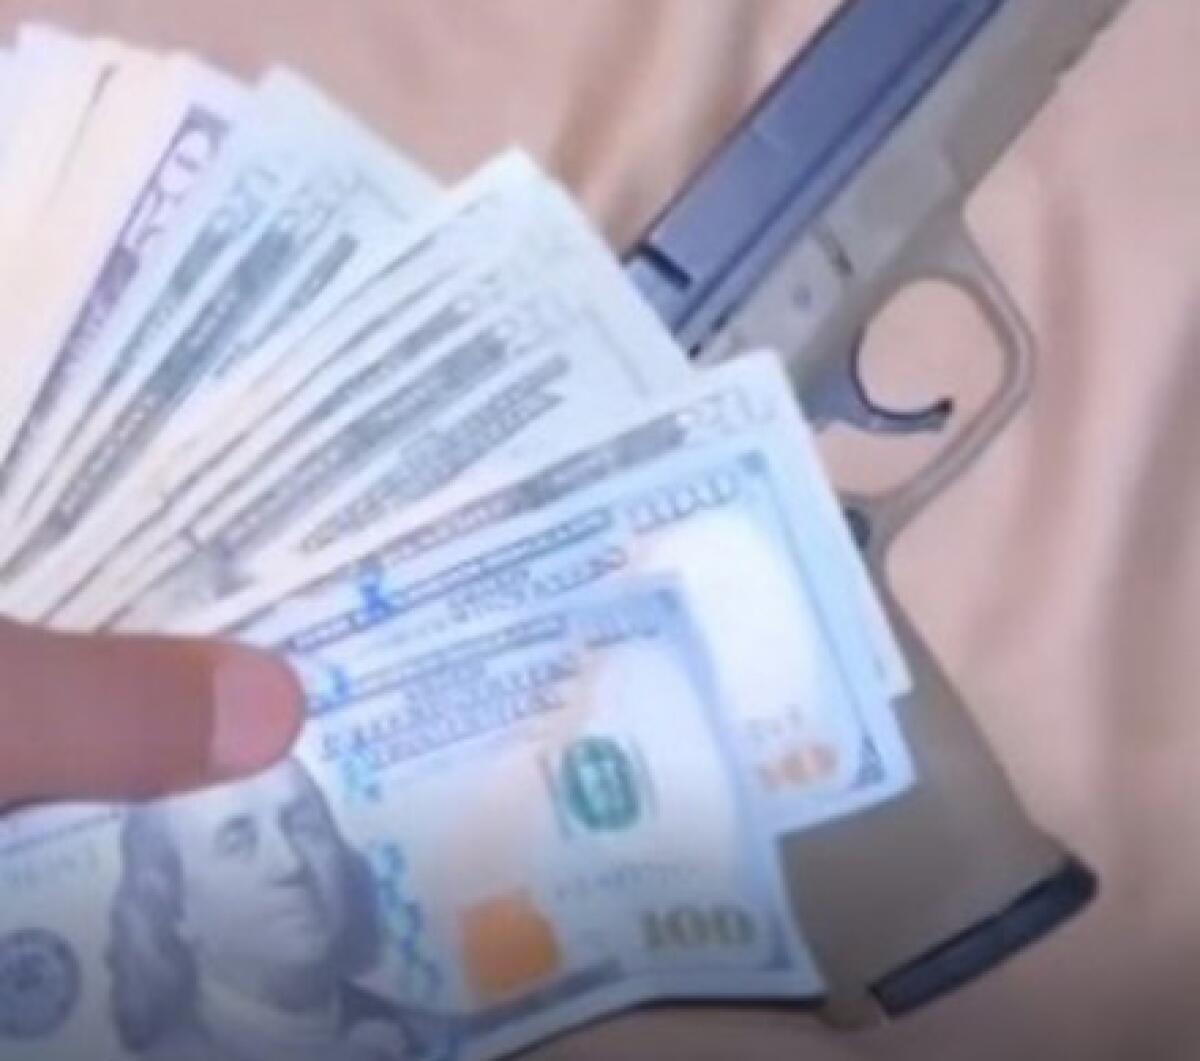 A closeup of a gun and a hand holding cash.